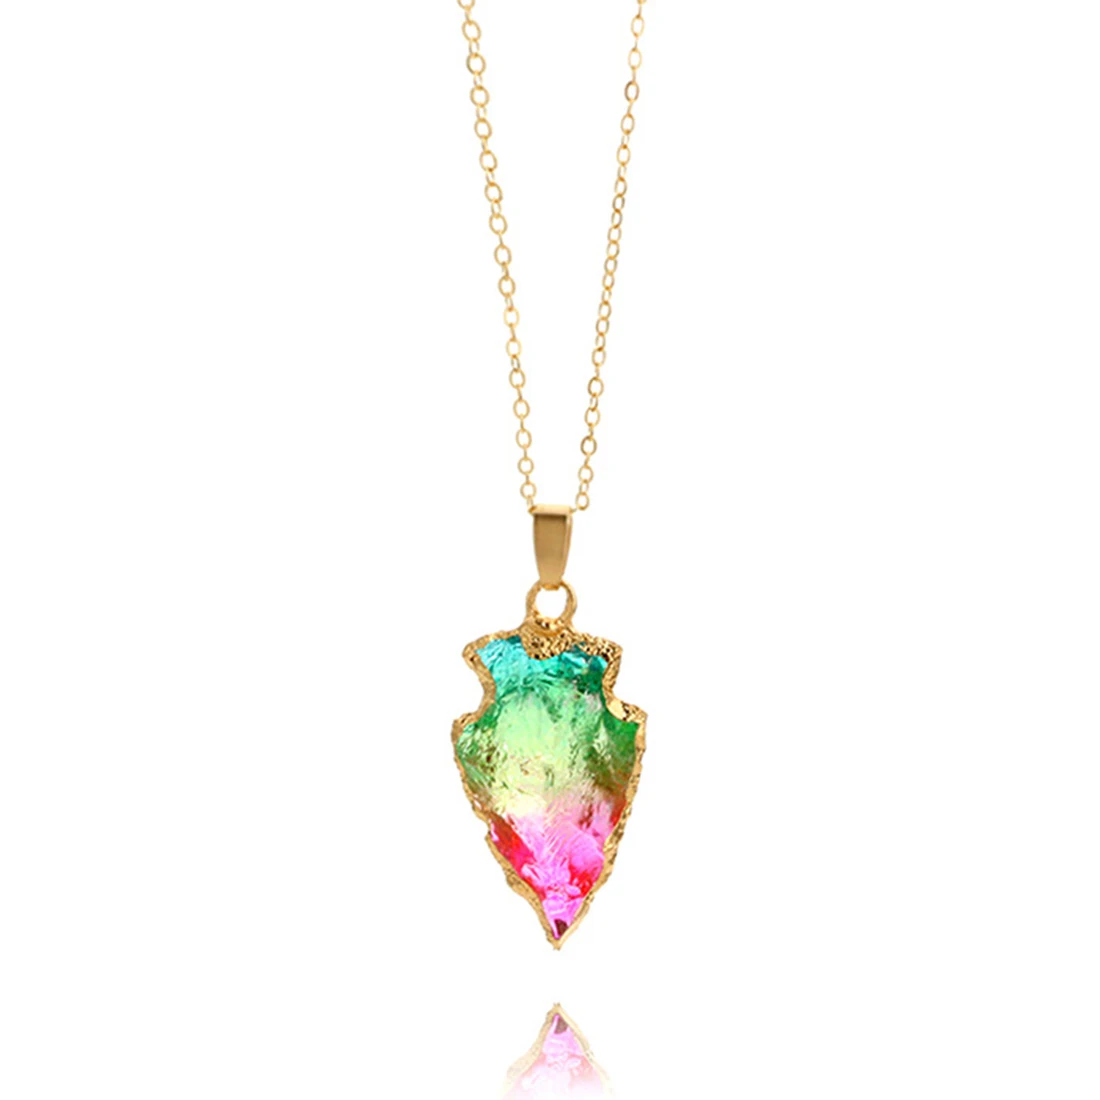 Random Arrowhead Shape Colorful Nature Stone Gold Chain Necklace for Women Fashion Jewelry | Украшения и аксессуары